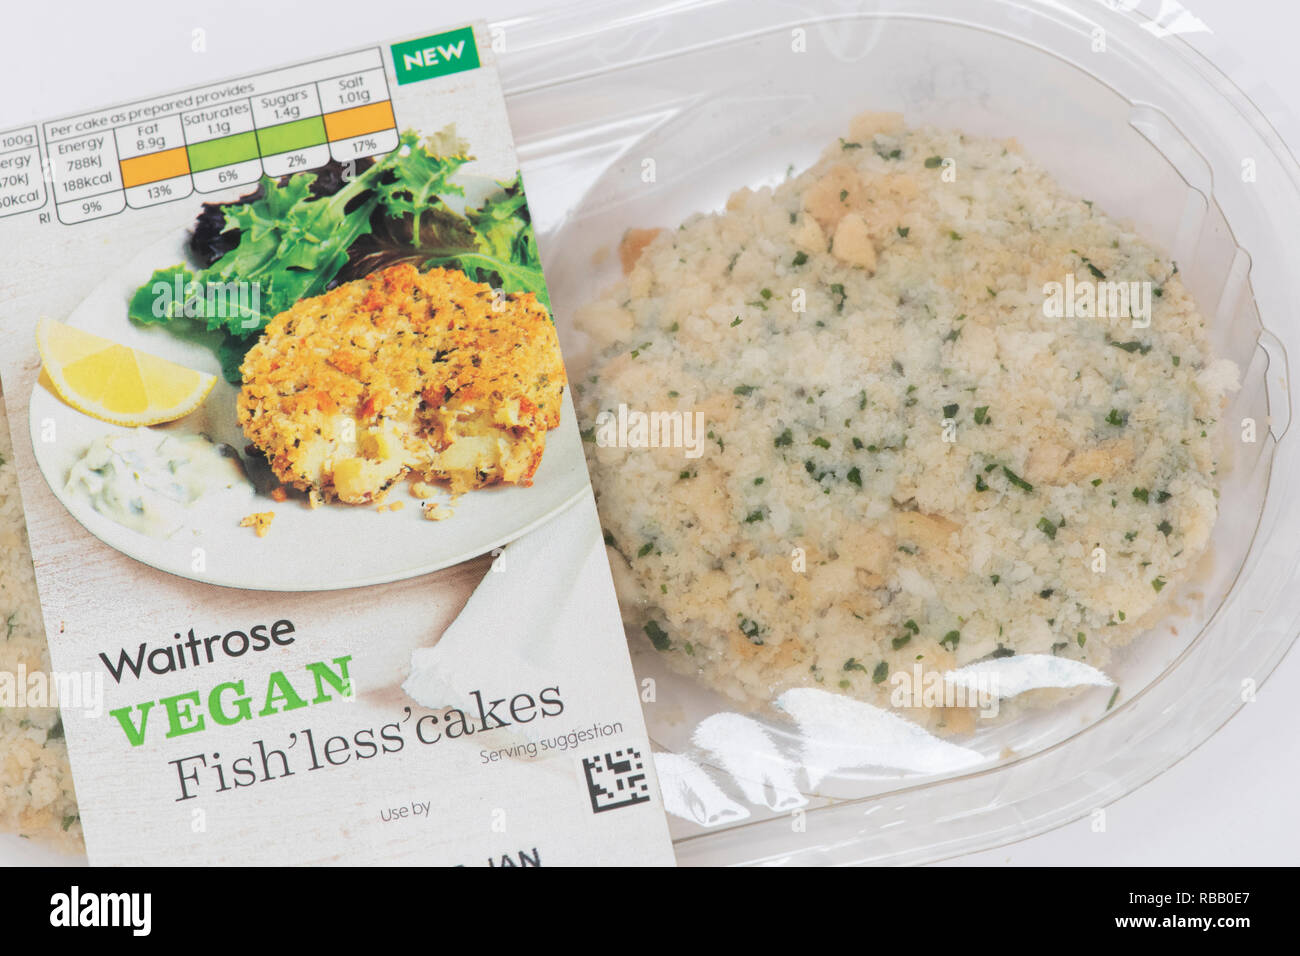 Waitrose Vegan fish’less cakes packet with vegan label. UK Stock Photo